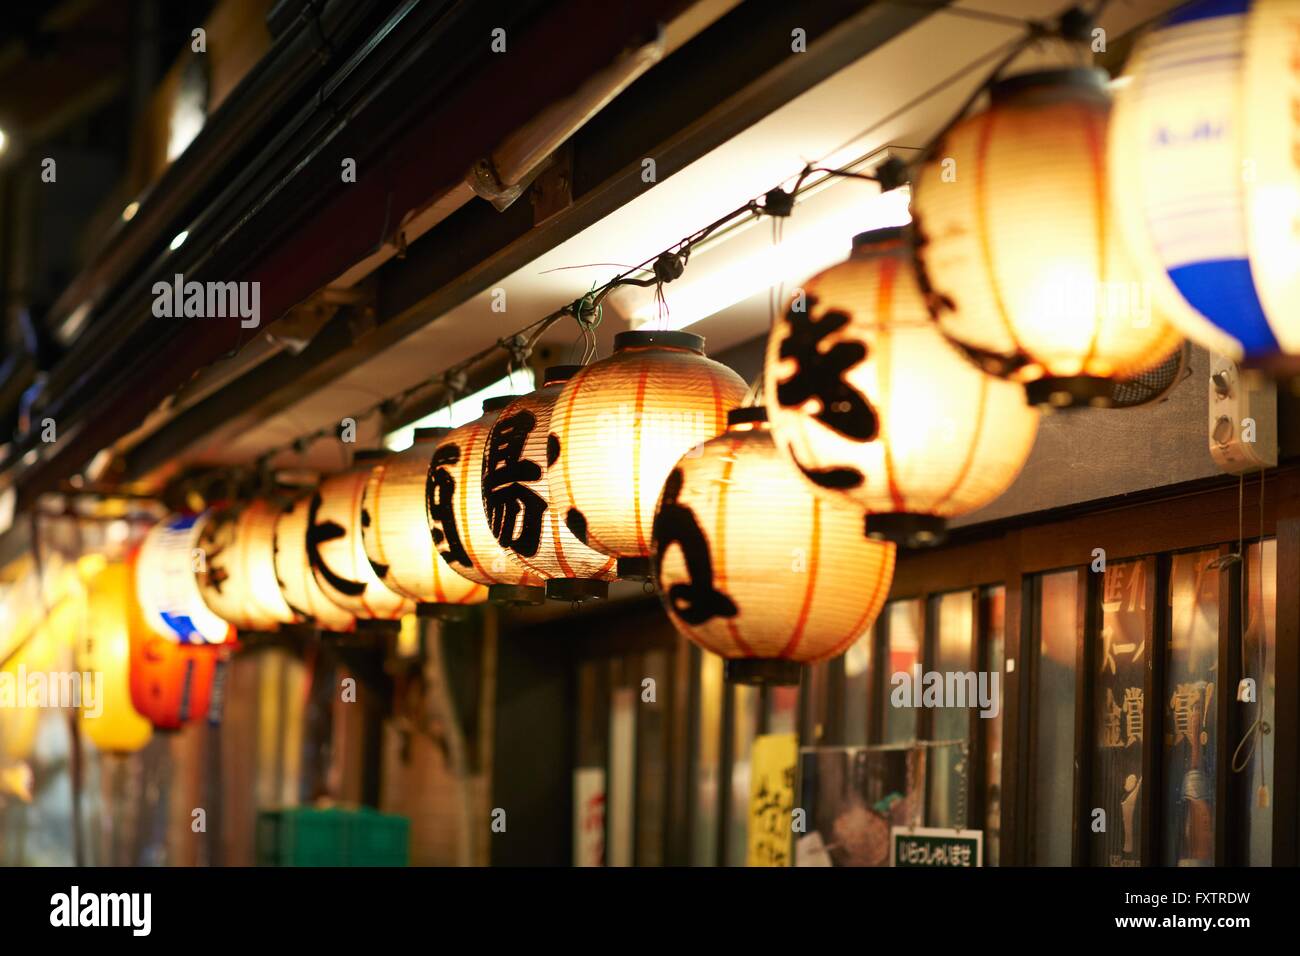 Row of illuminated paper lanterns at night, Tokyo, Japan Stock Photo - Alamy